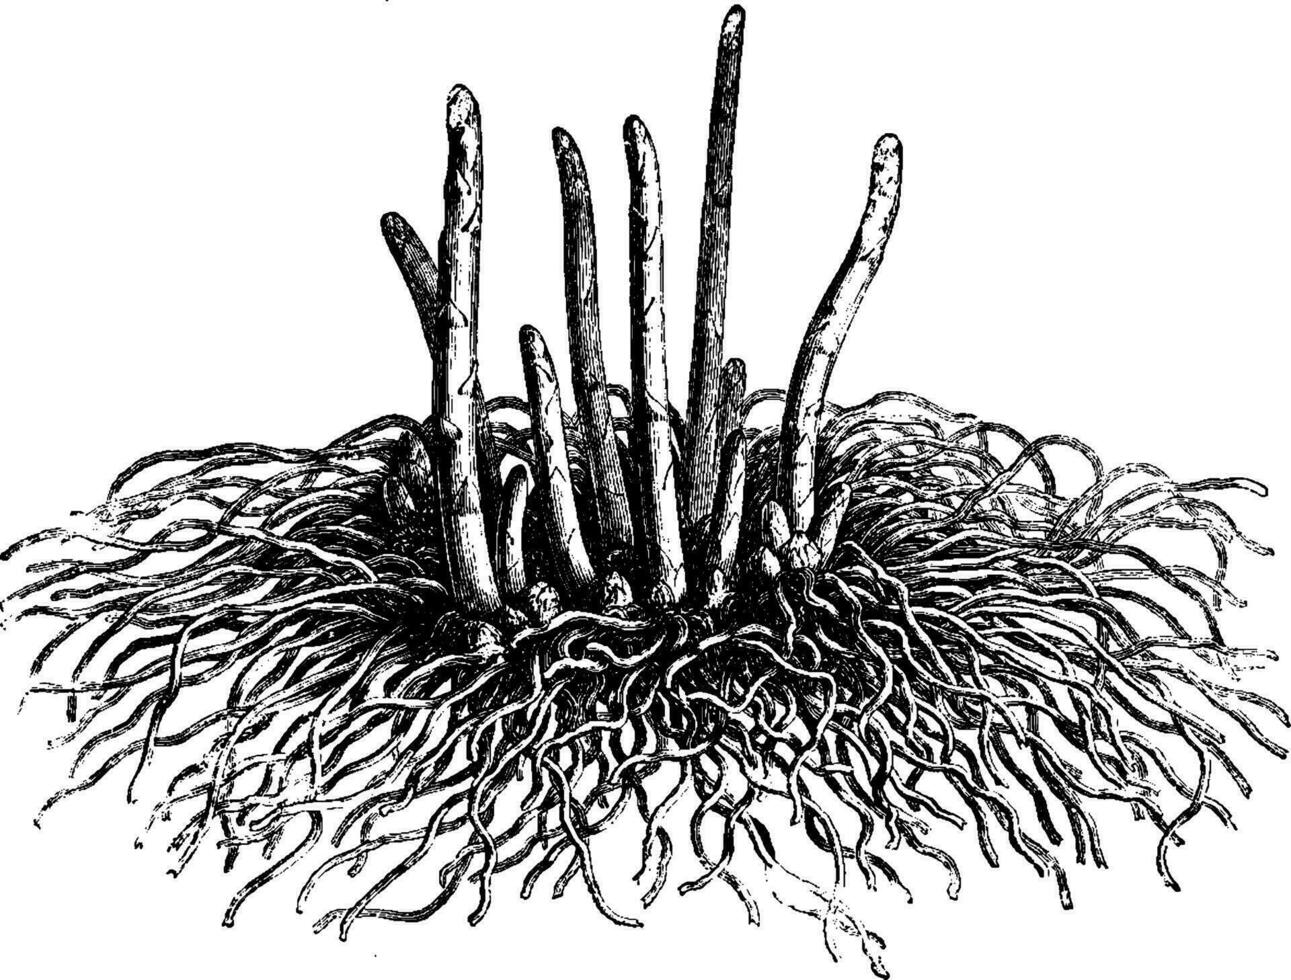 Asparagus Crown for Lifting vintage illustration. vector